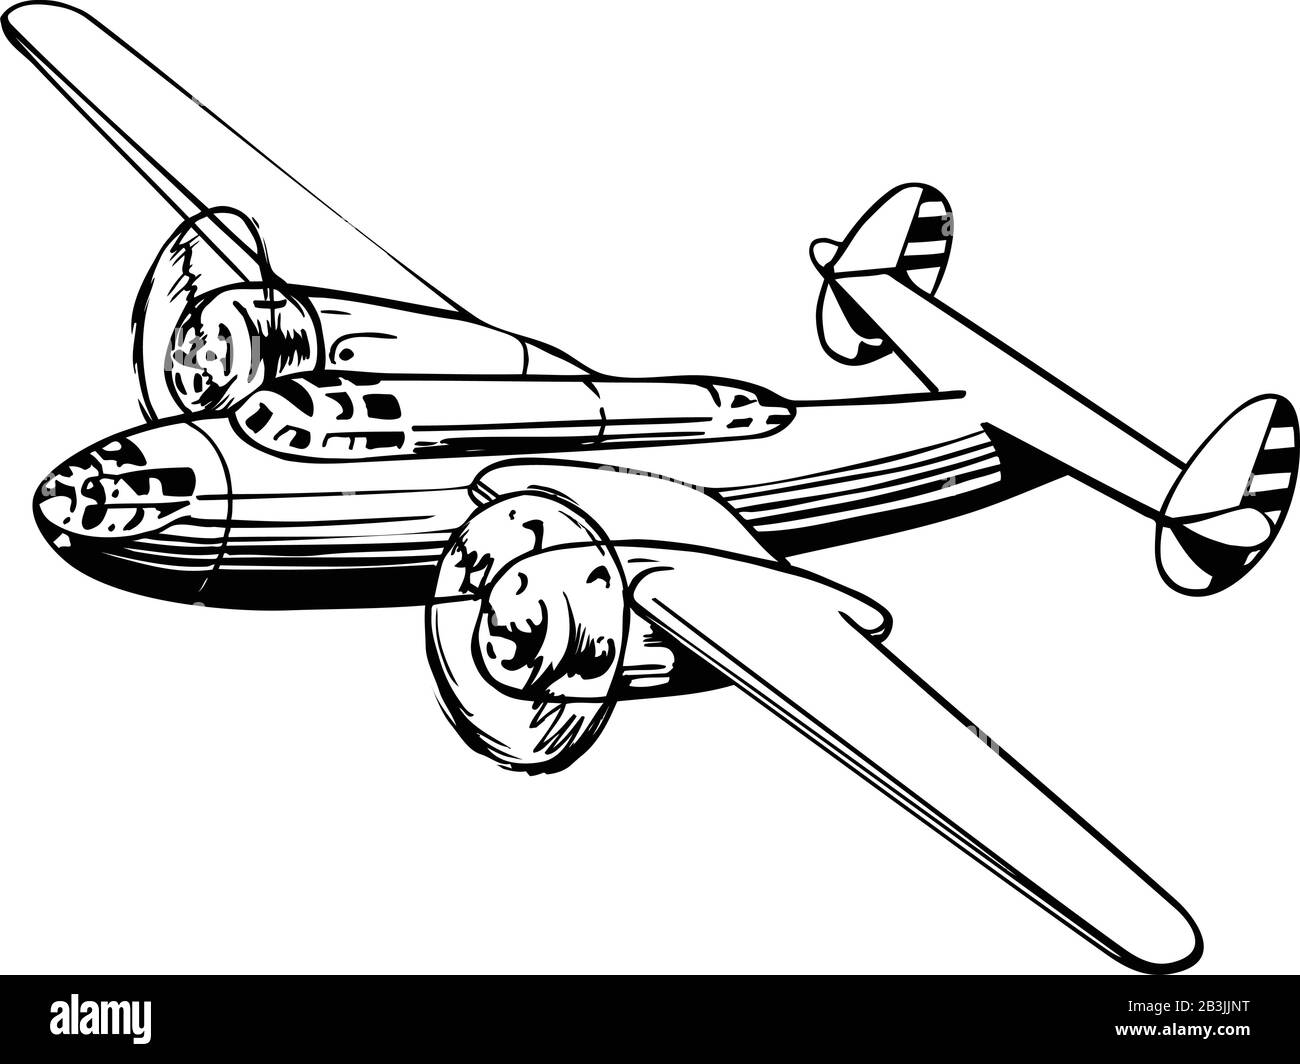 Introducir 94+ imagen aviones de la segunda guerra mundial dibujo